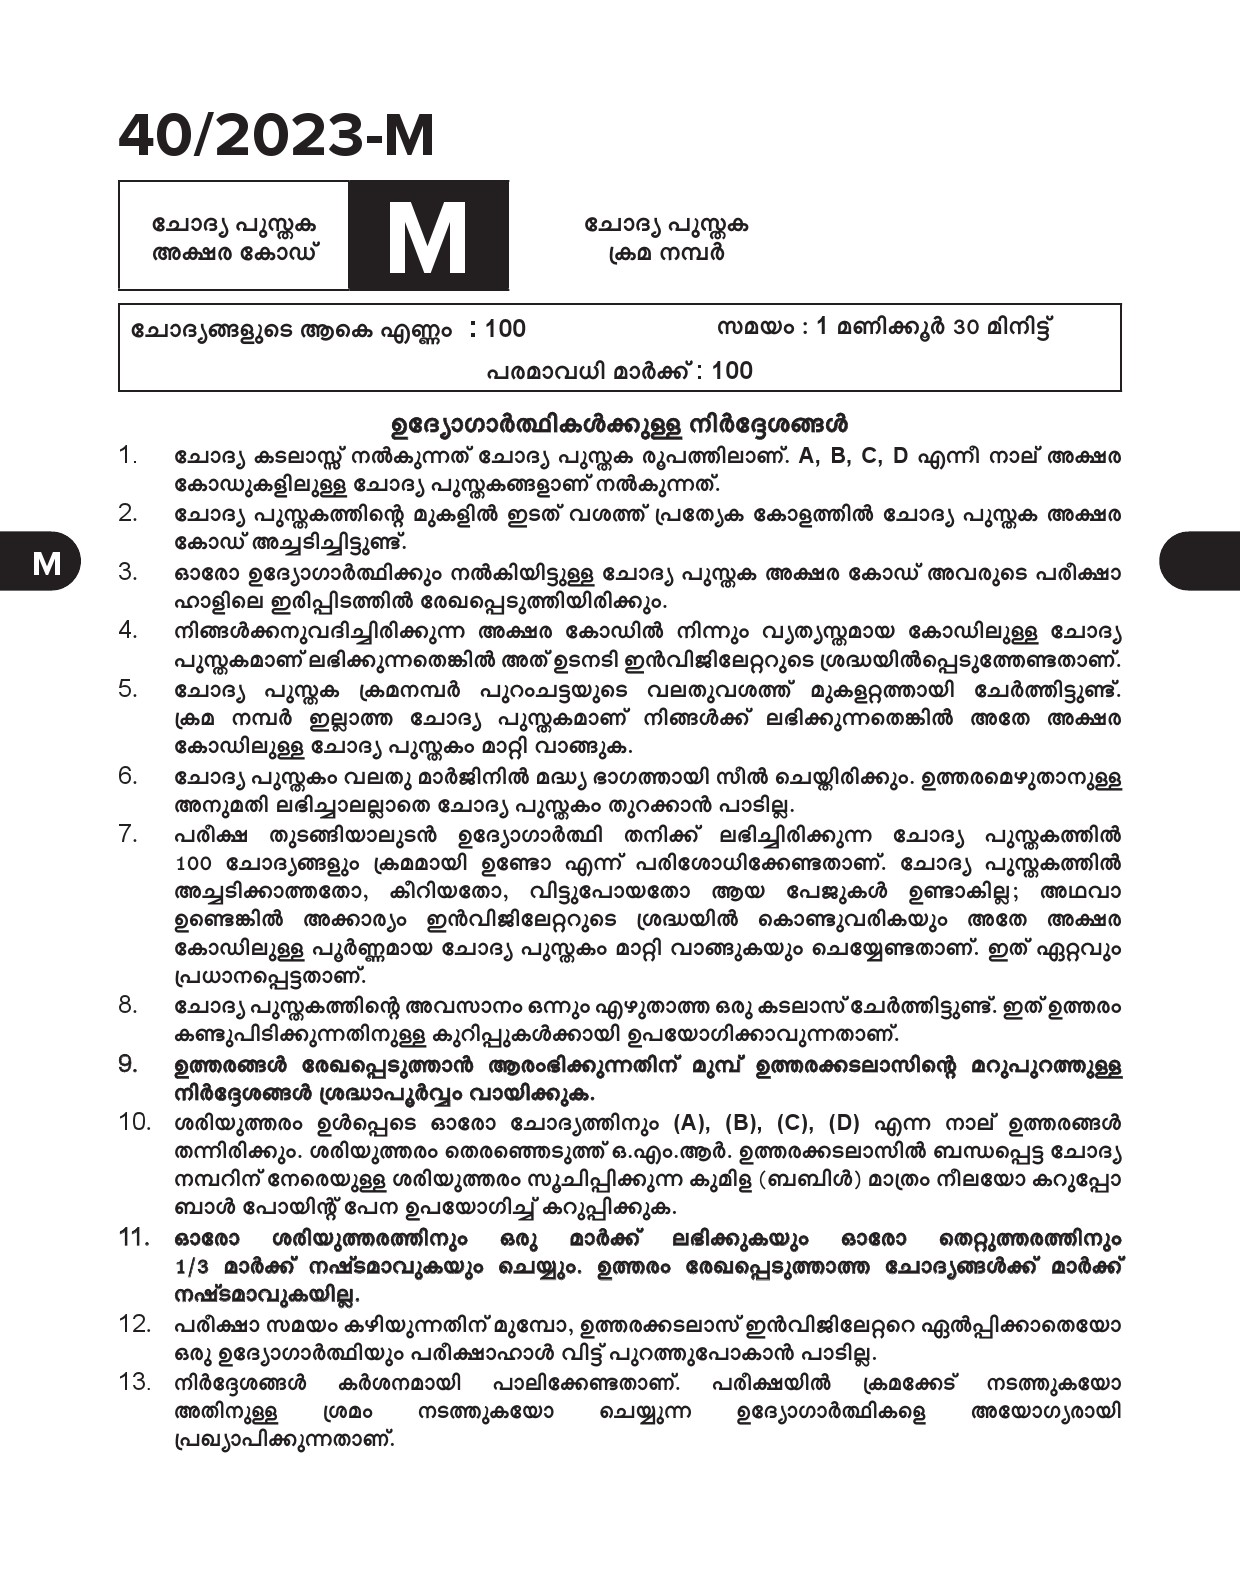 KPSC Data Entry Operator Malayalam Exam 2023 Code 0402023 M 1